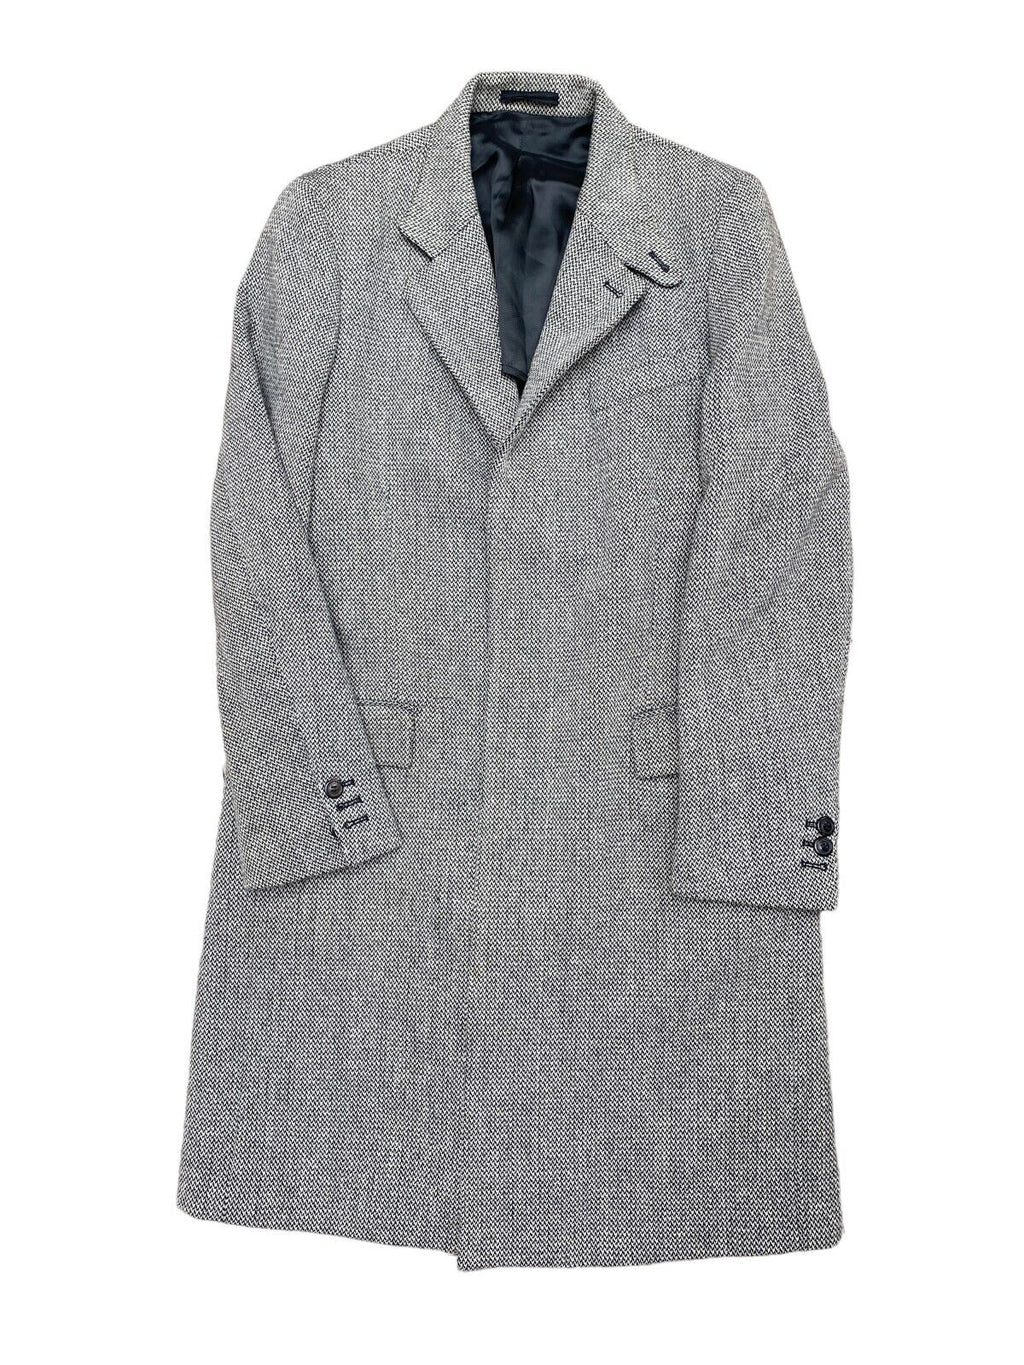 Archive FW 2004 Grey / Black Herringbone Long Coat Size 50